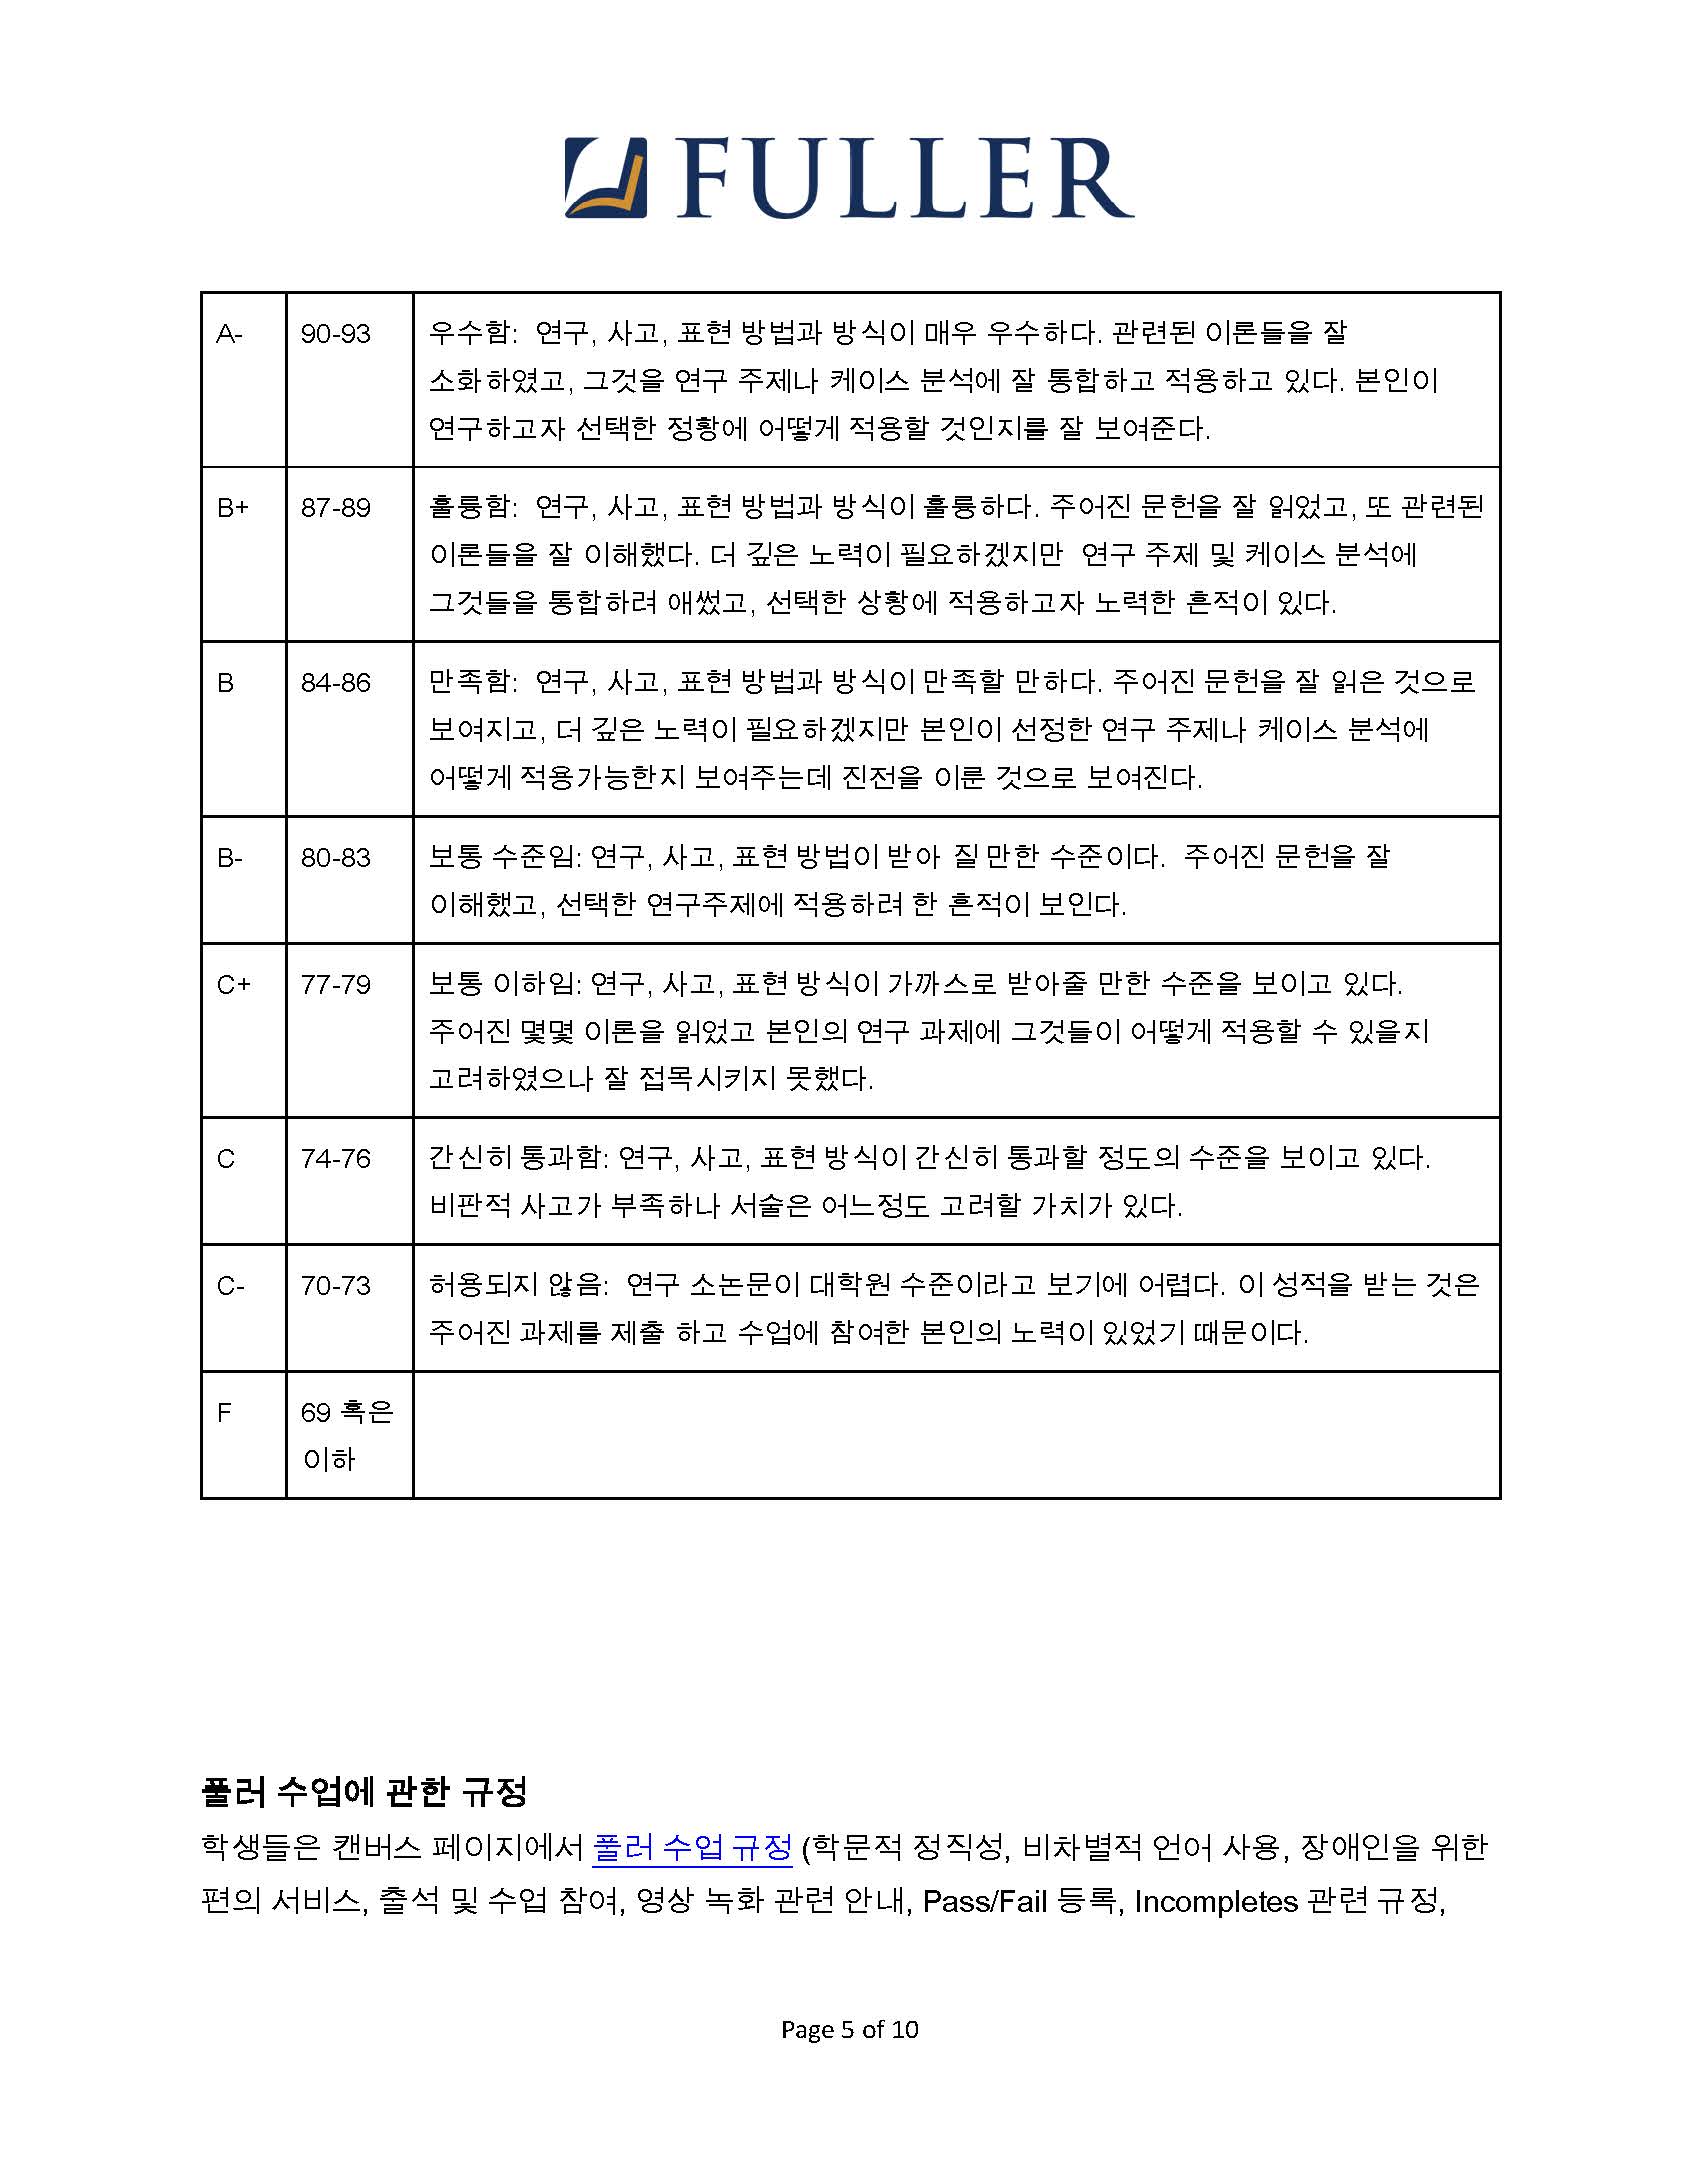 MK765_MT537 Syllabus (Korean)_Page_05.jpg